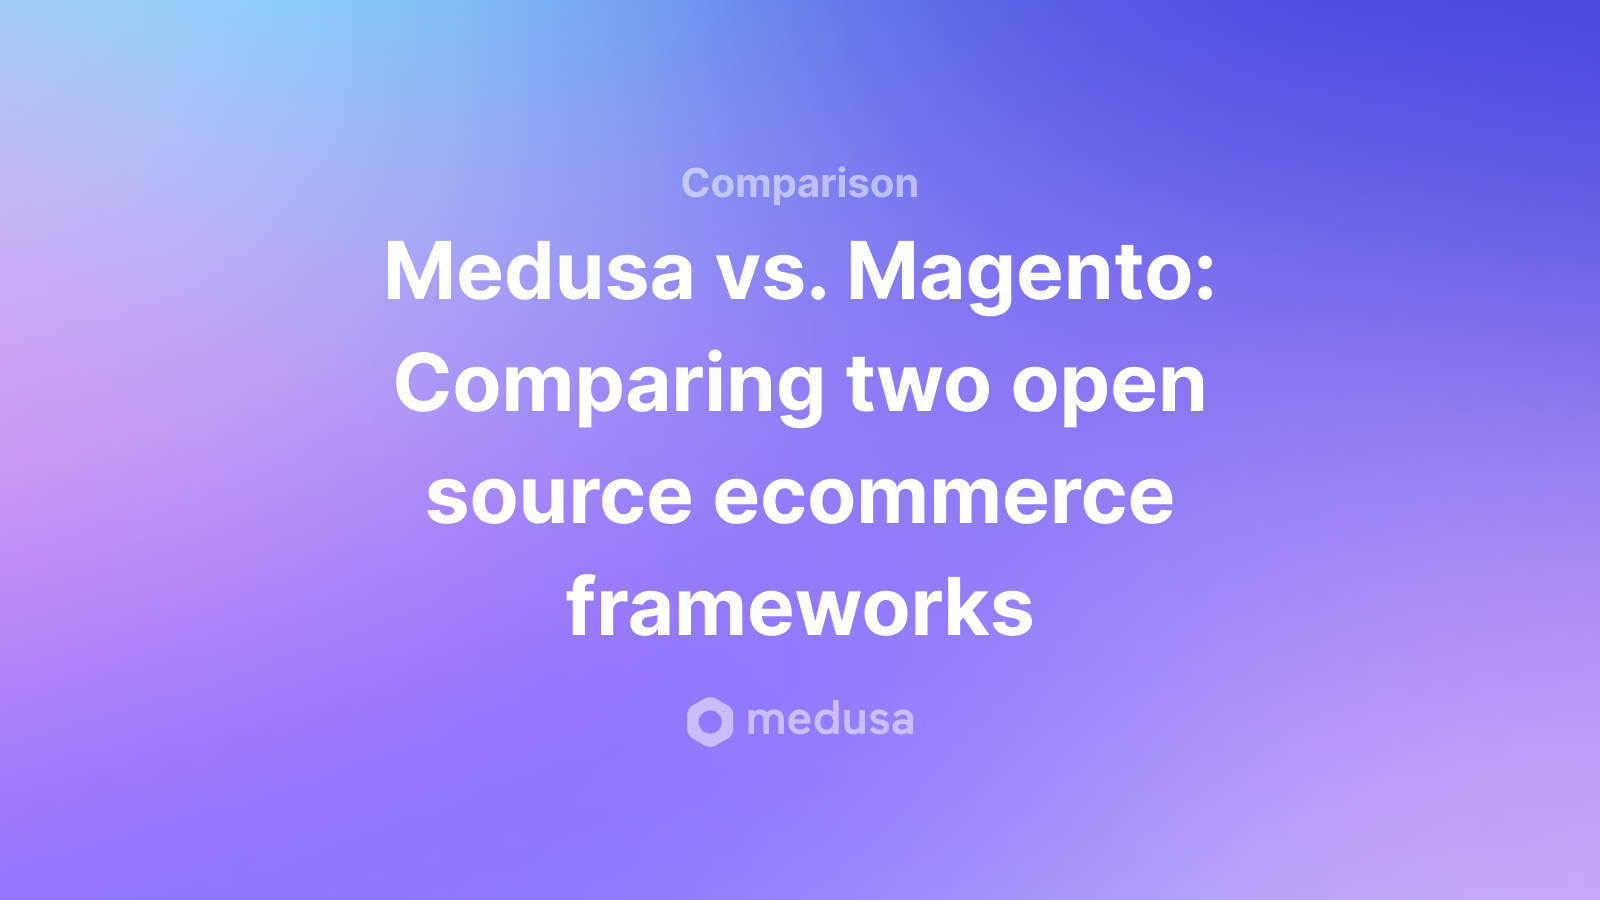 Medusa vs. Magento: Comparing two open source ecommerce frameworks